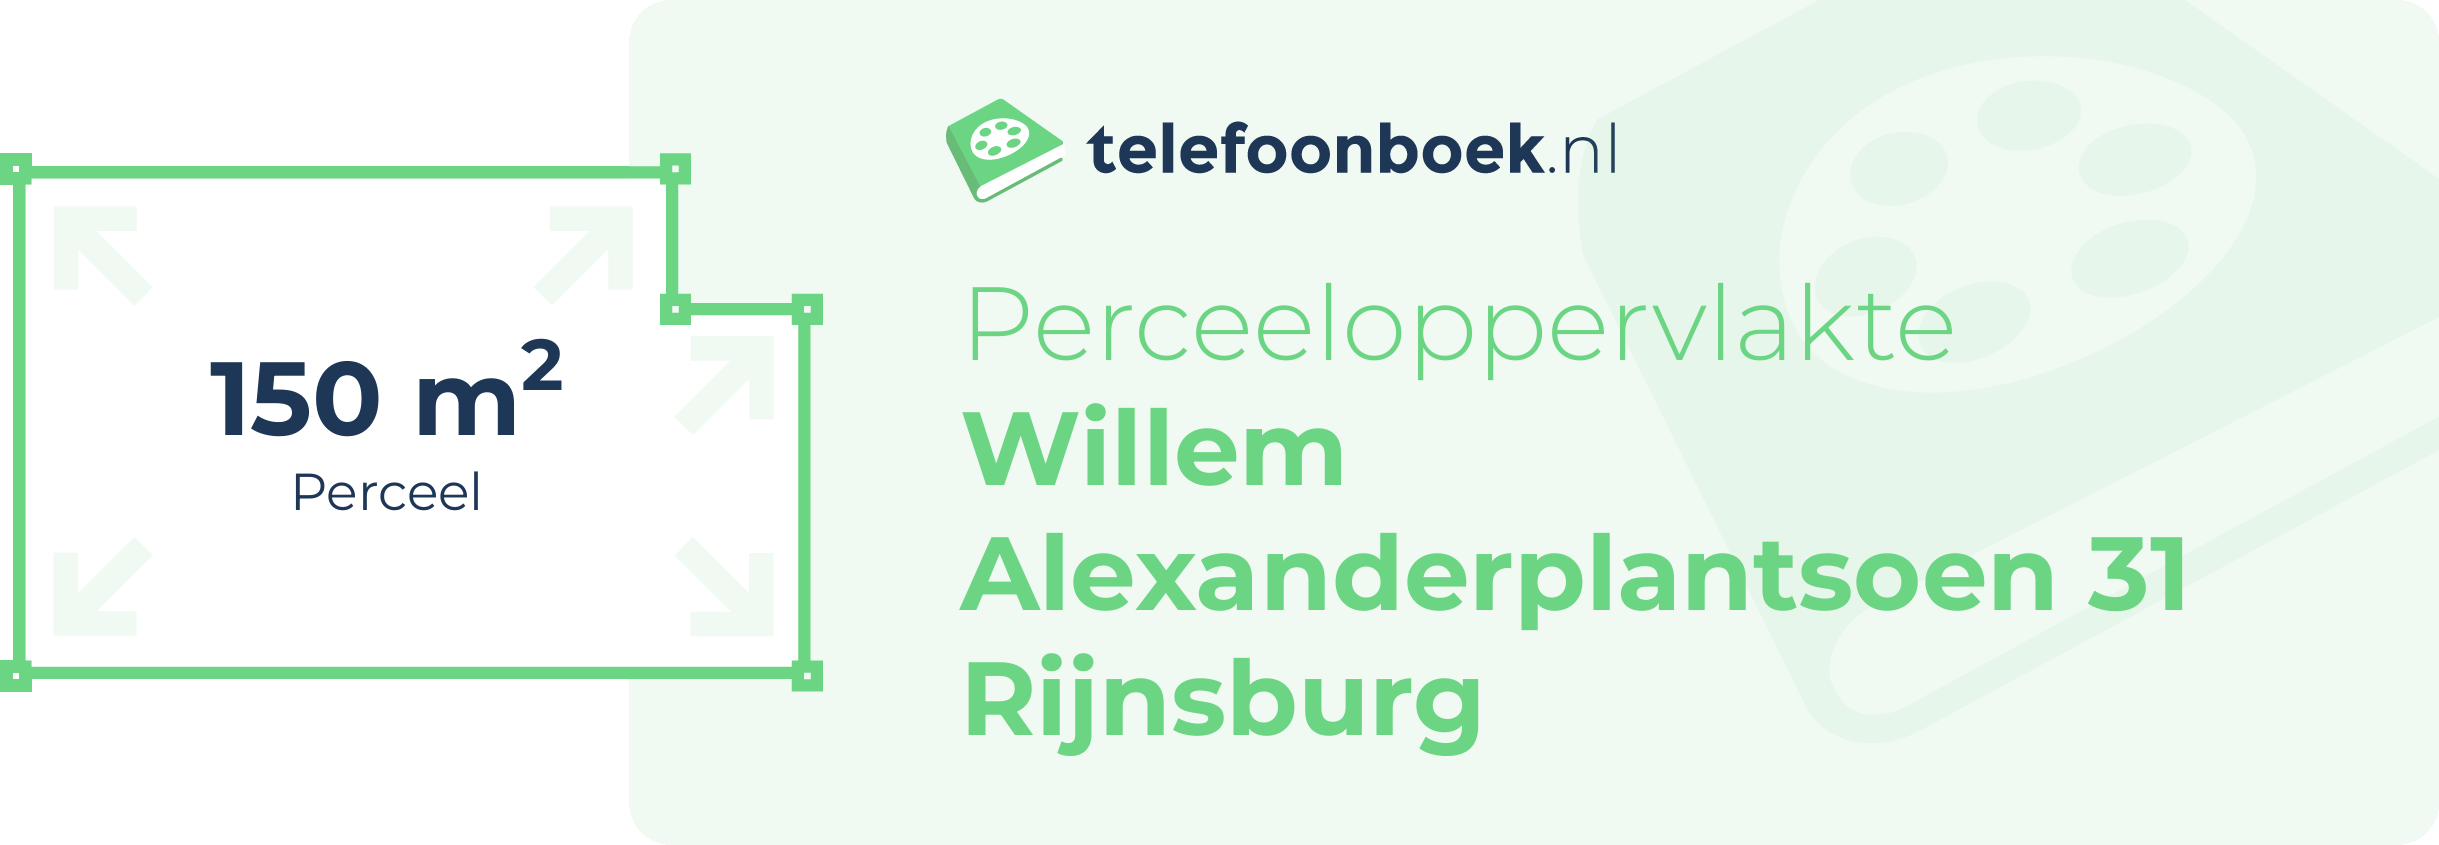 Perceeloppervlakte Willem Alexanderplantsoen 31 Rijnsburg